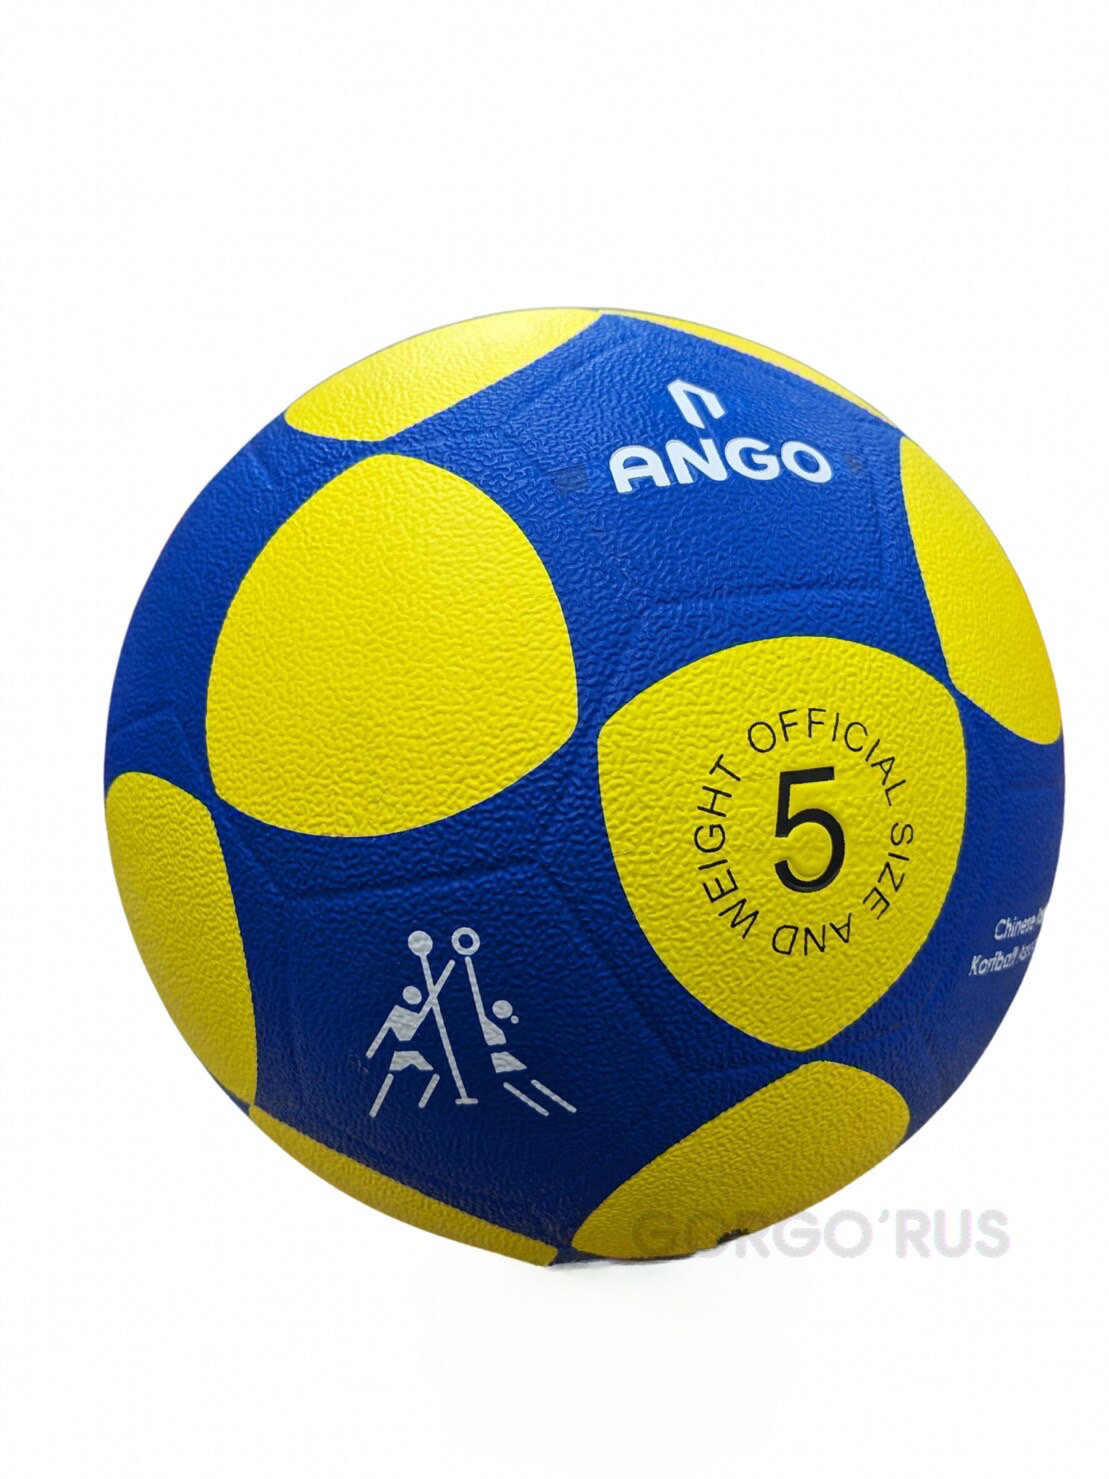 ANGO 5號室外專用合球 練習合球 合球協會指定用球 原廠公司貨